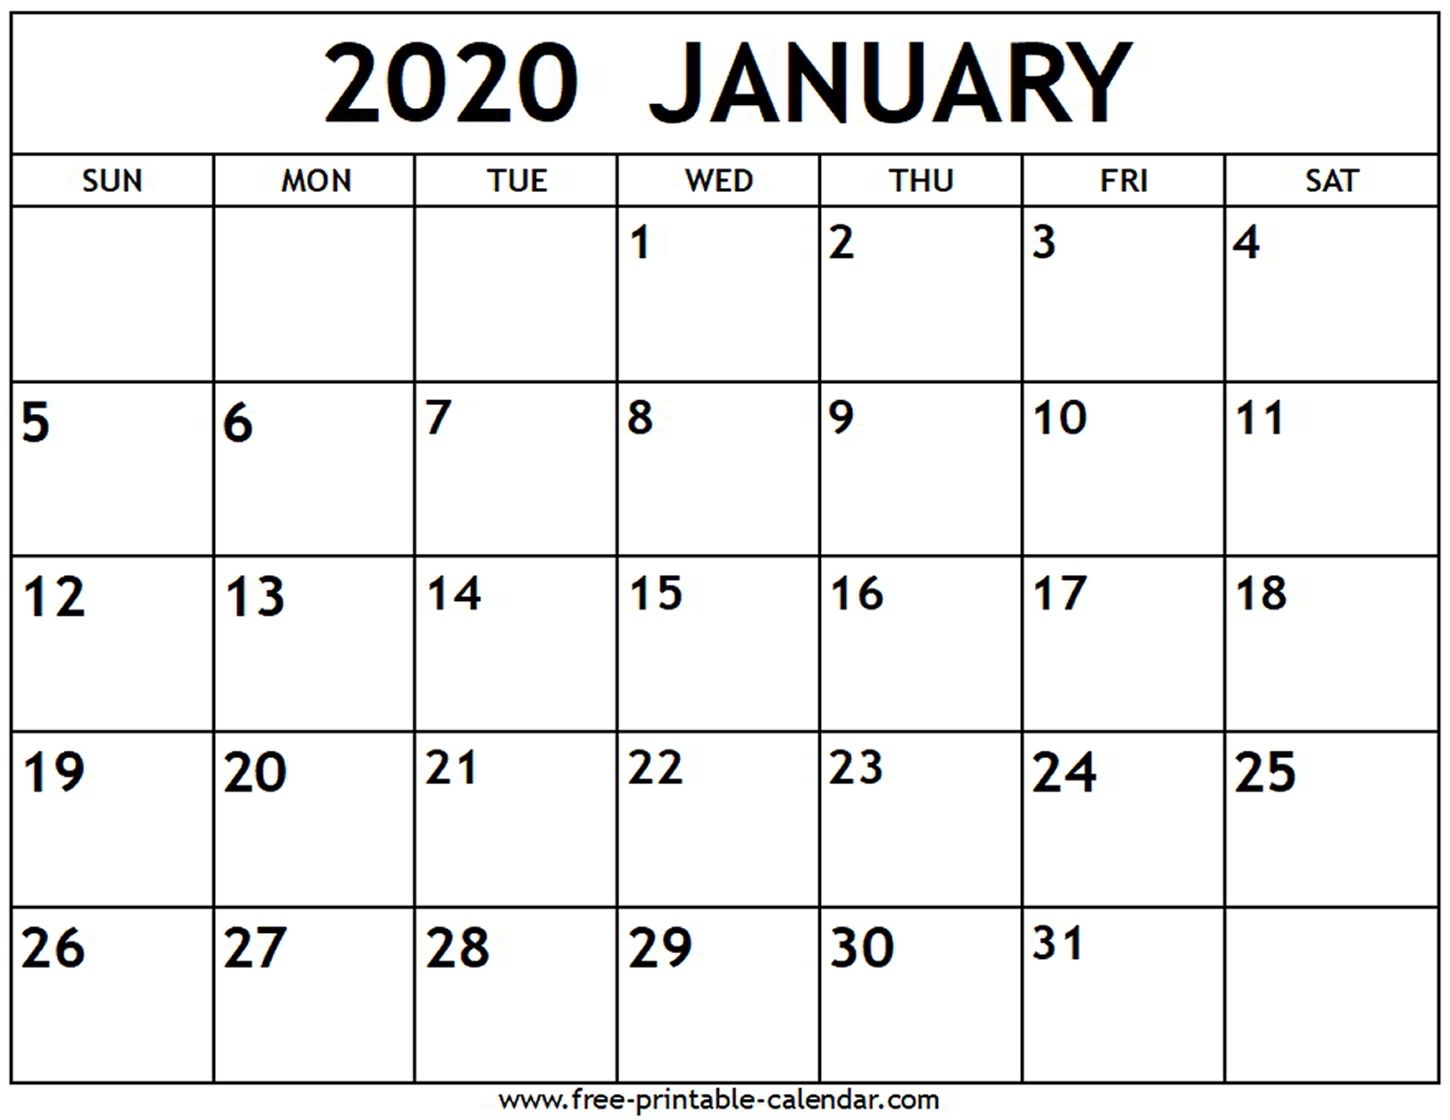 January 2020 Calendar - Free-Printable-Calendar Free Printable Calendar Templates 2020